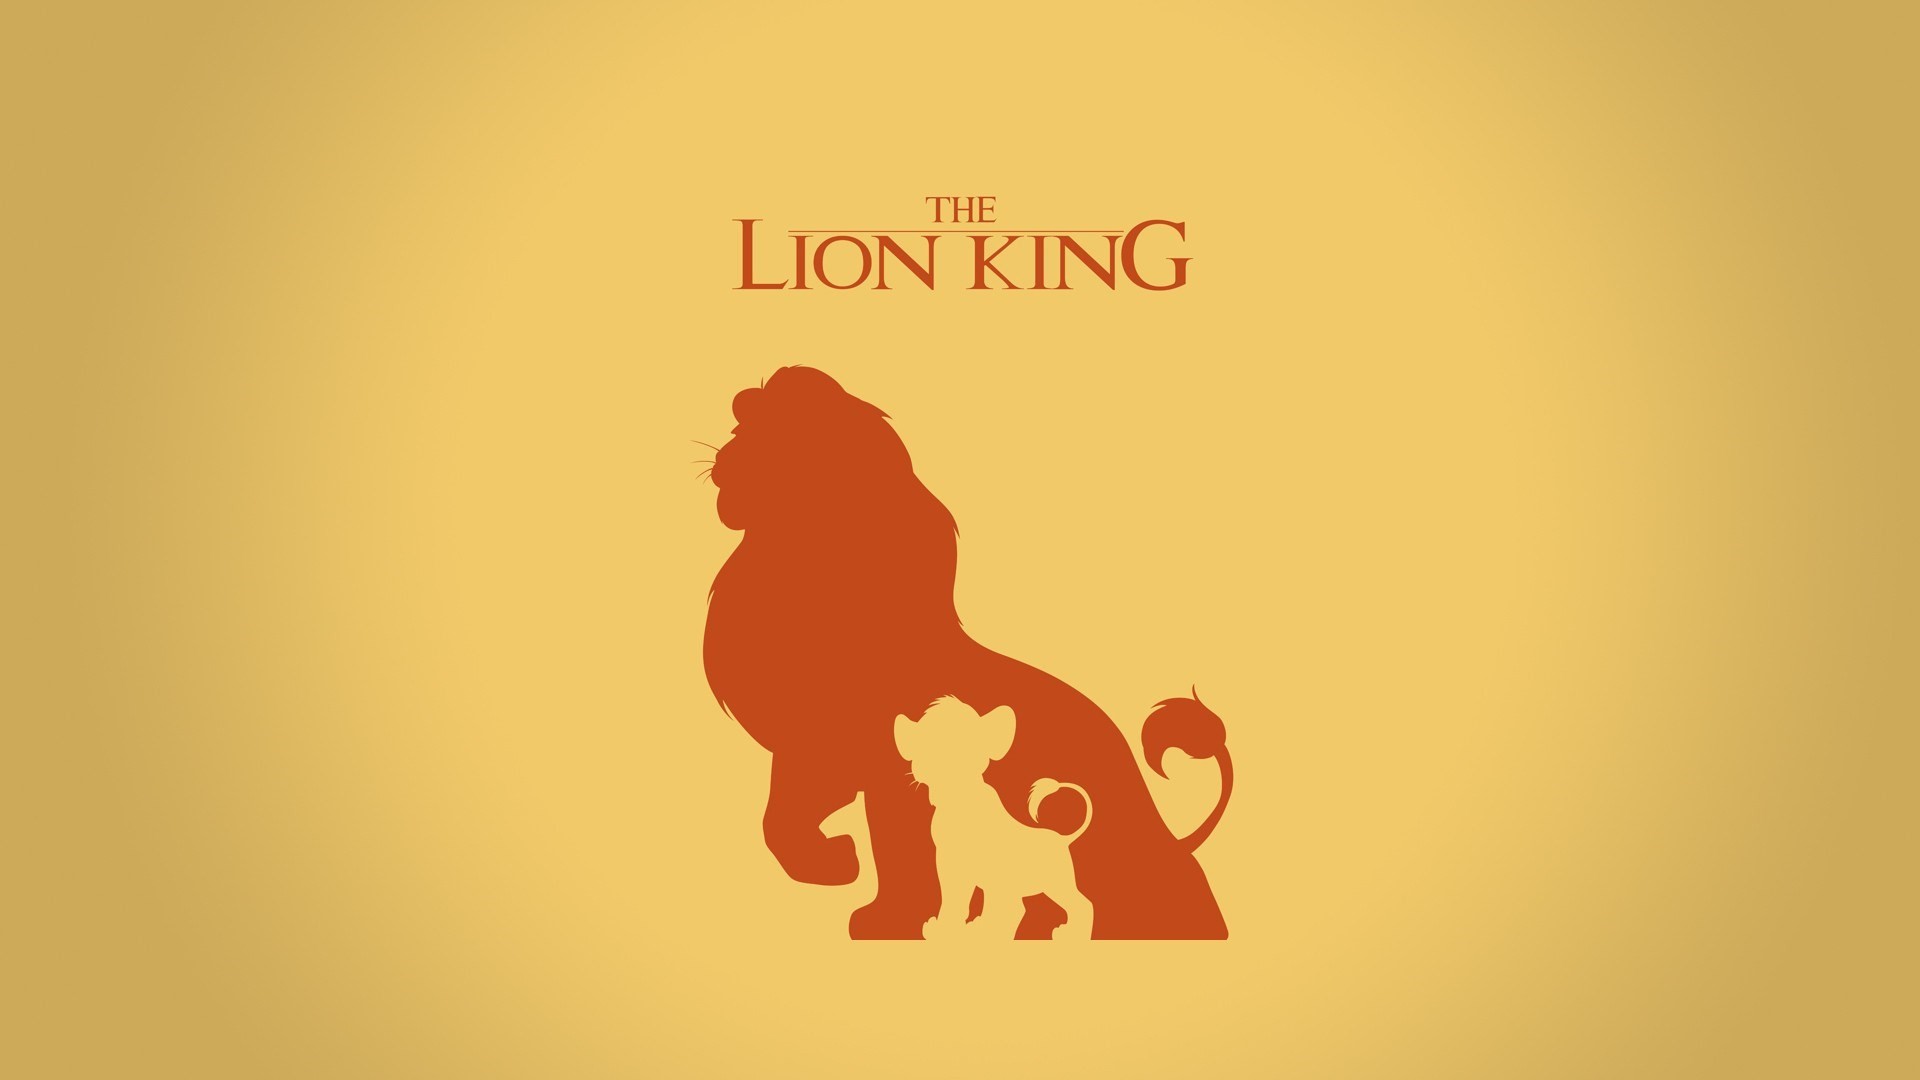 1920x1080 Lion King - The Lion King Wallpaper (37324599) - Fanpop